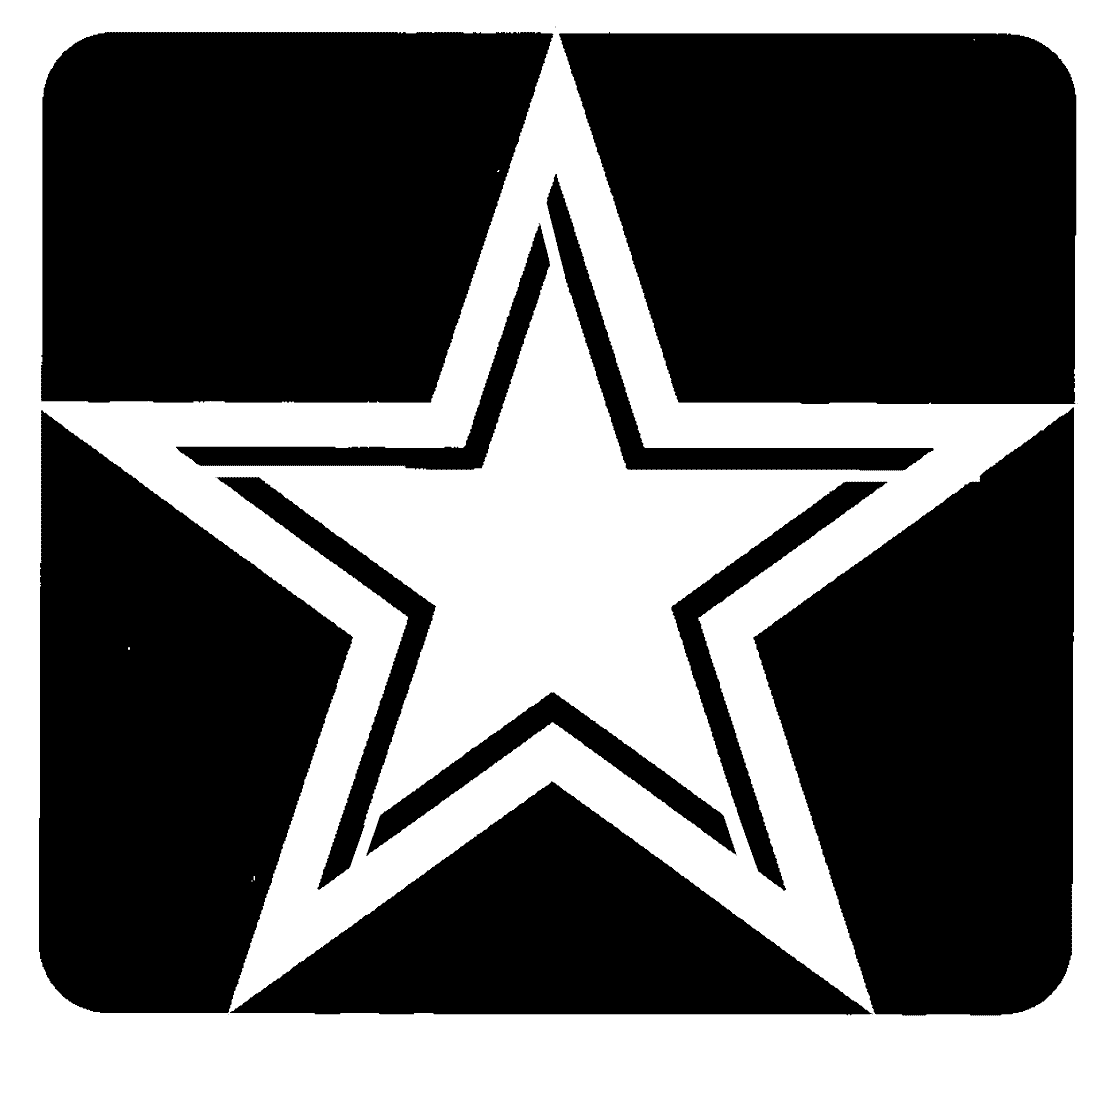 Stencil Logo